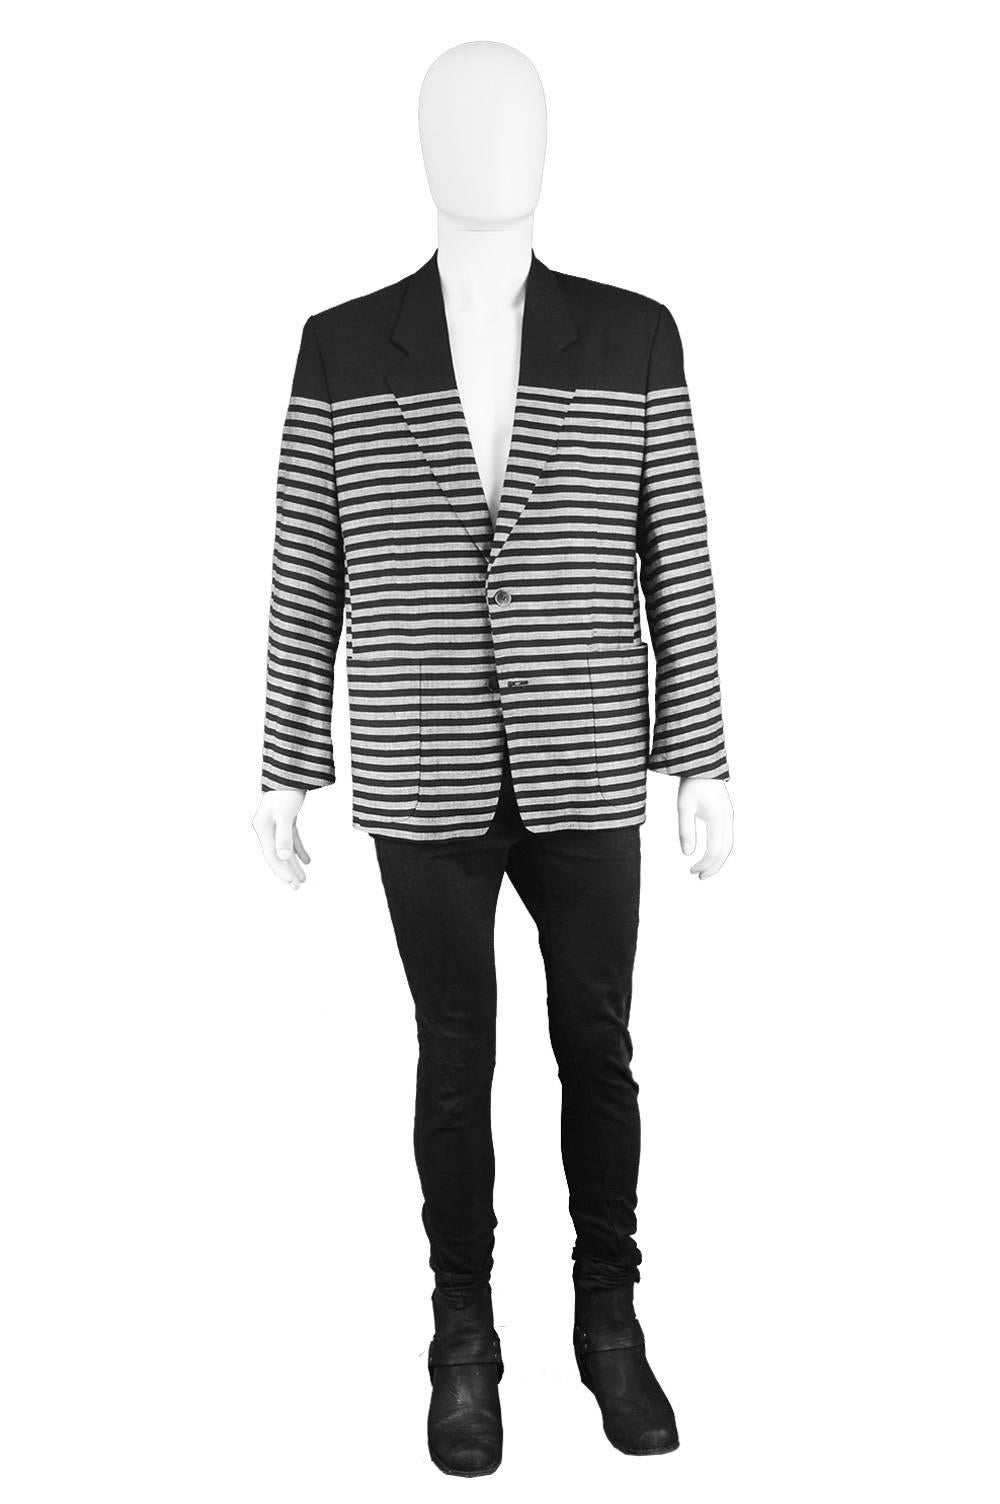 Kenzo Homme Vintage 1980's Linen & Wool Black & Gray Striped Men's Blazer Jacket

Estimated Size: Men's Medium. please check measurements. 
Chest - 42” / 106cm (allow a couple of inches room for movement)
Waist -38” / 96cm
Length (Shoulder to Hem) -